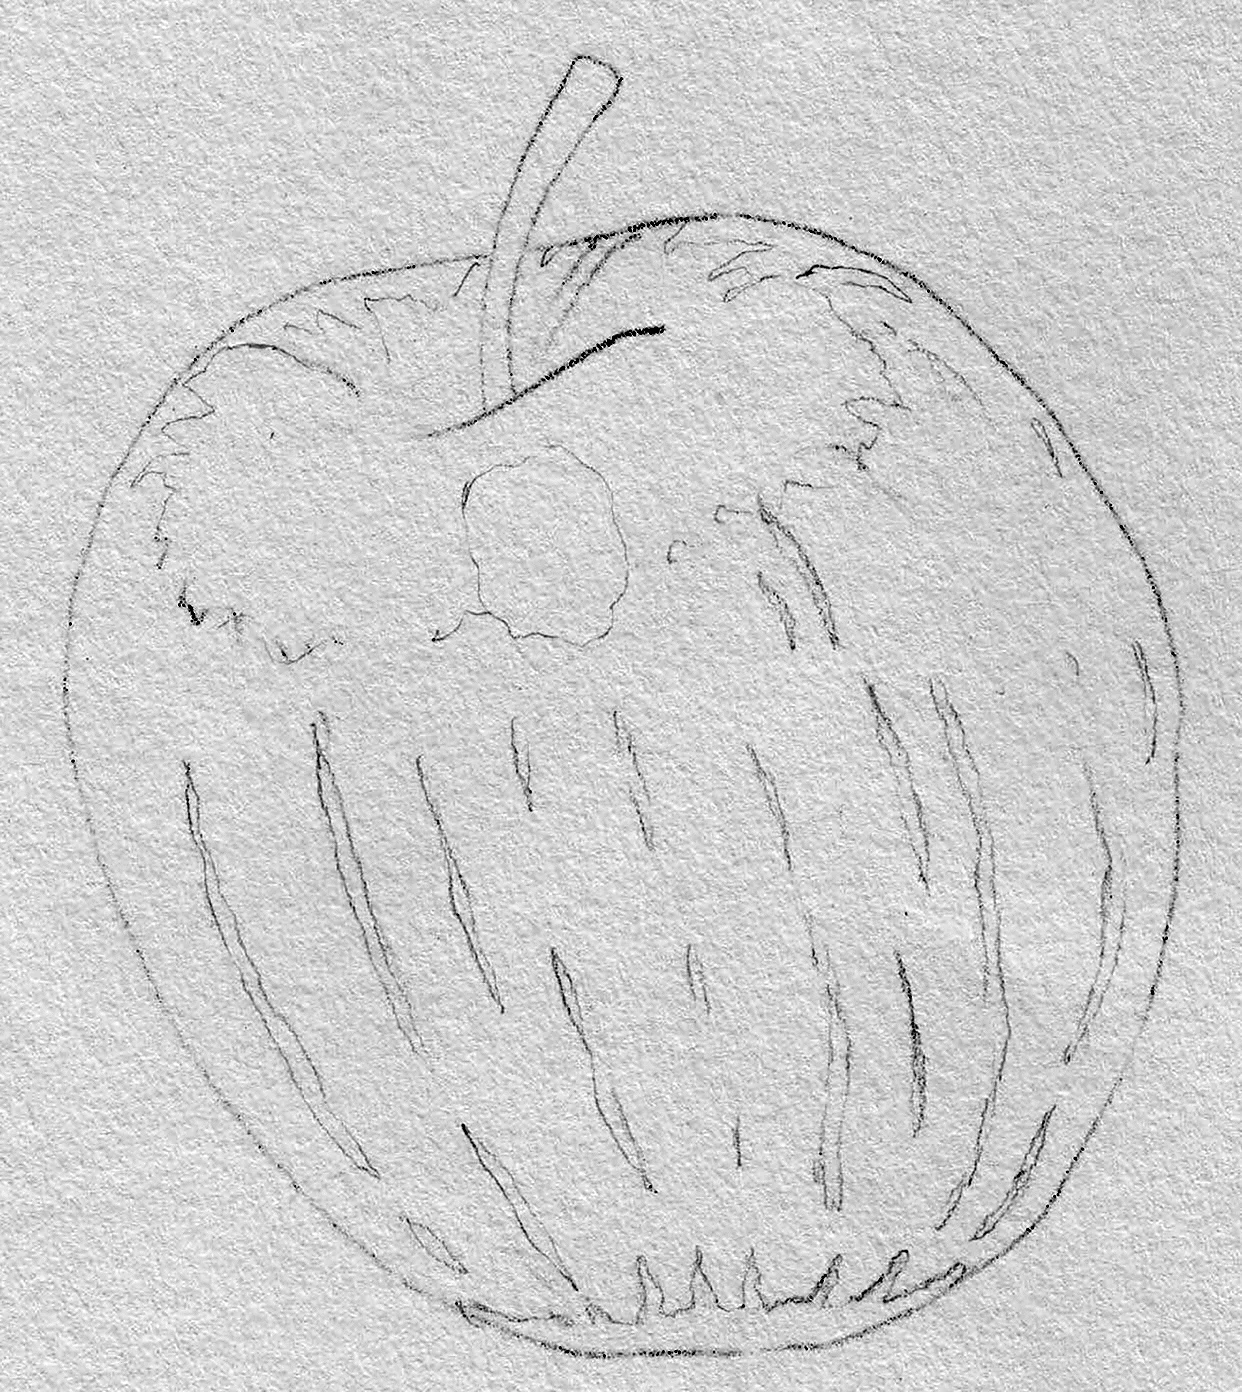 Яблоко рисунок карандашом